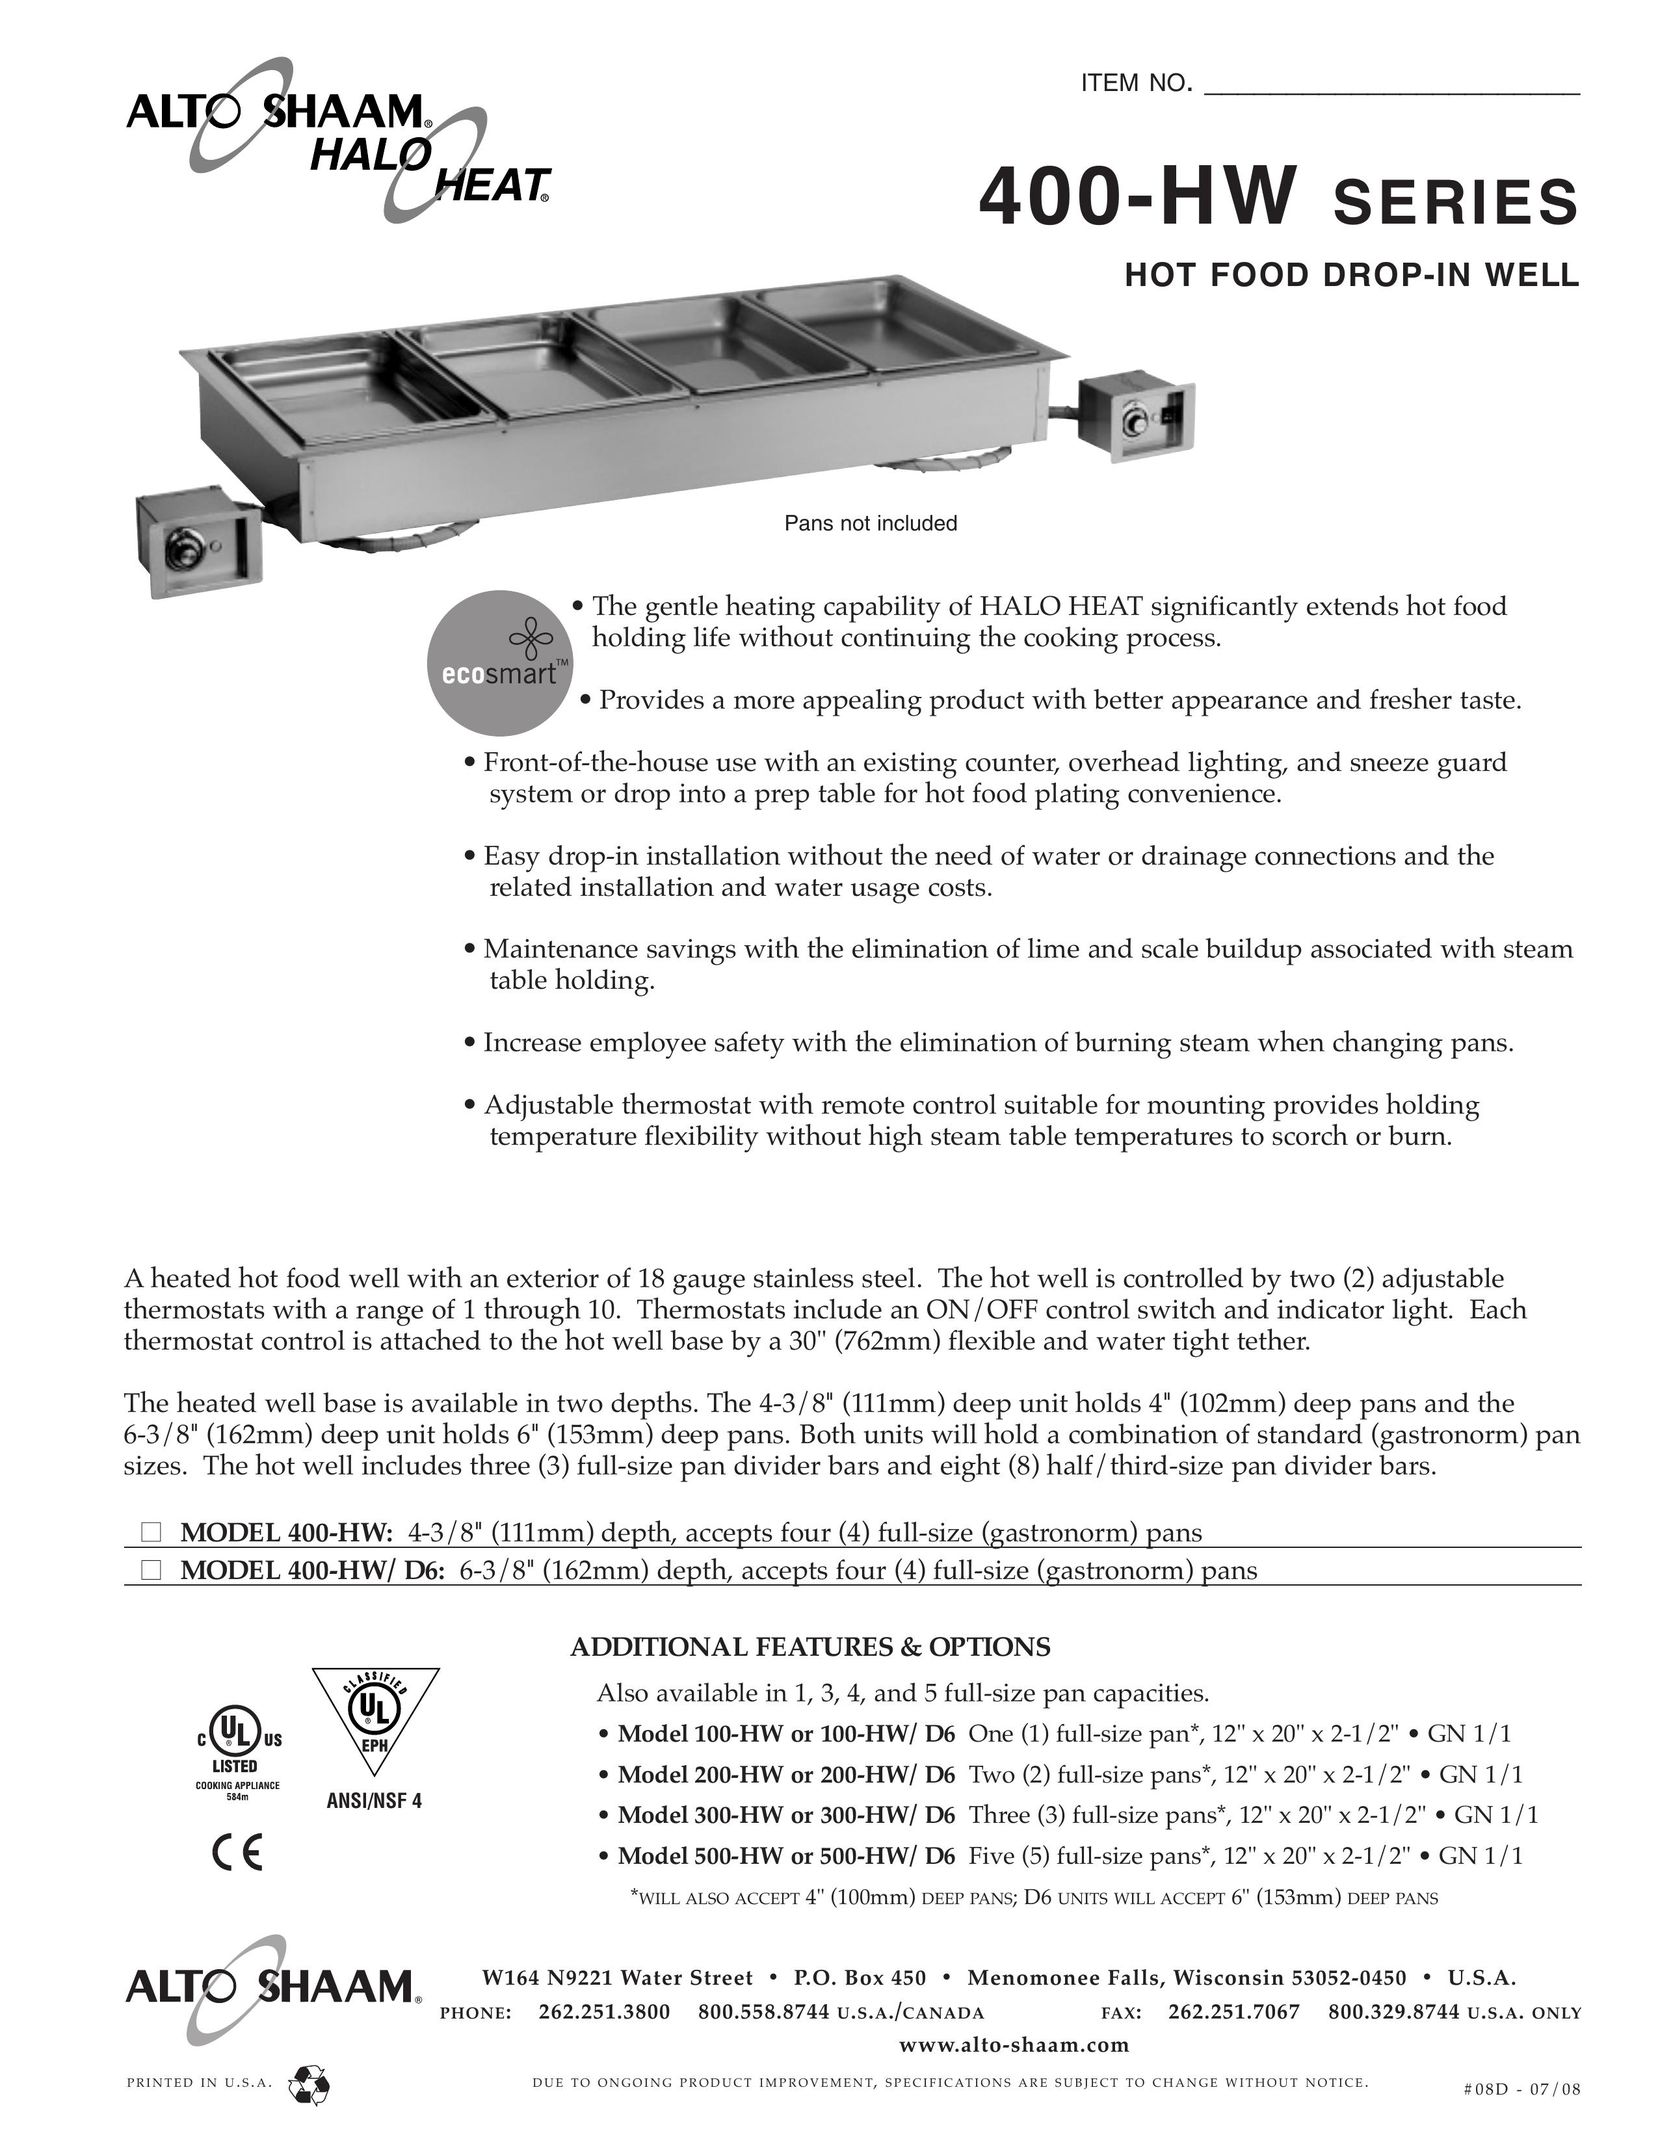 Alto-Shaam 400-HW Food Warmer User Manual